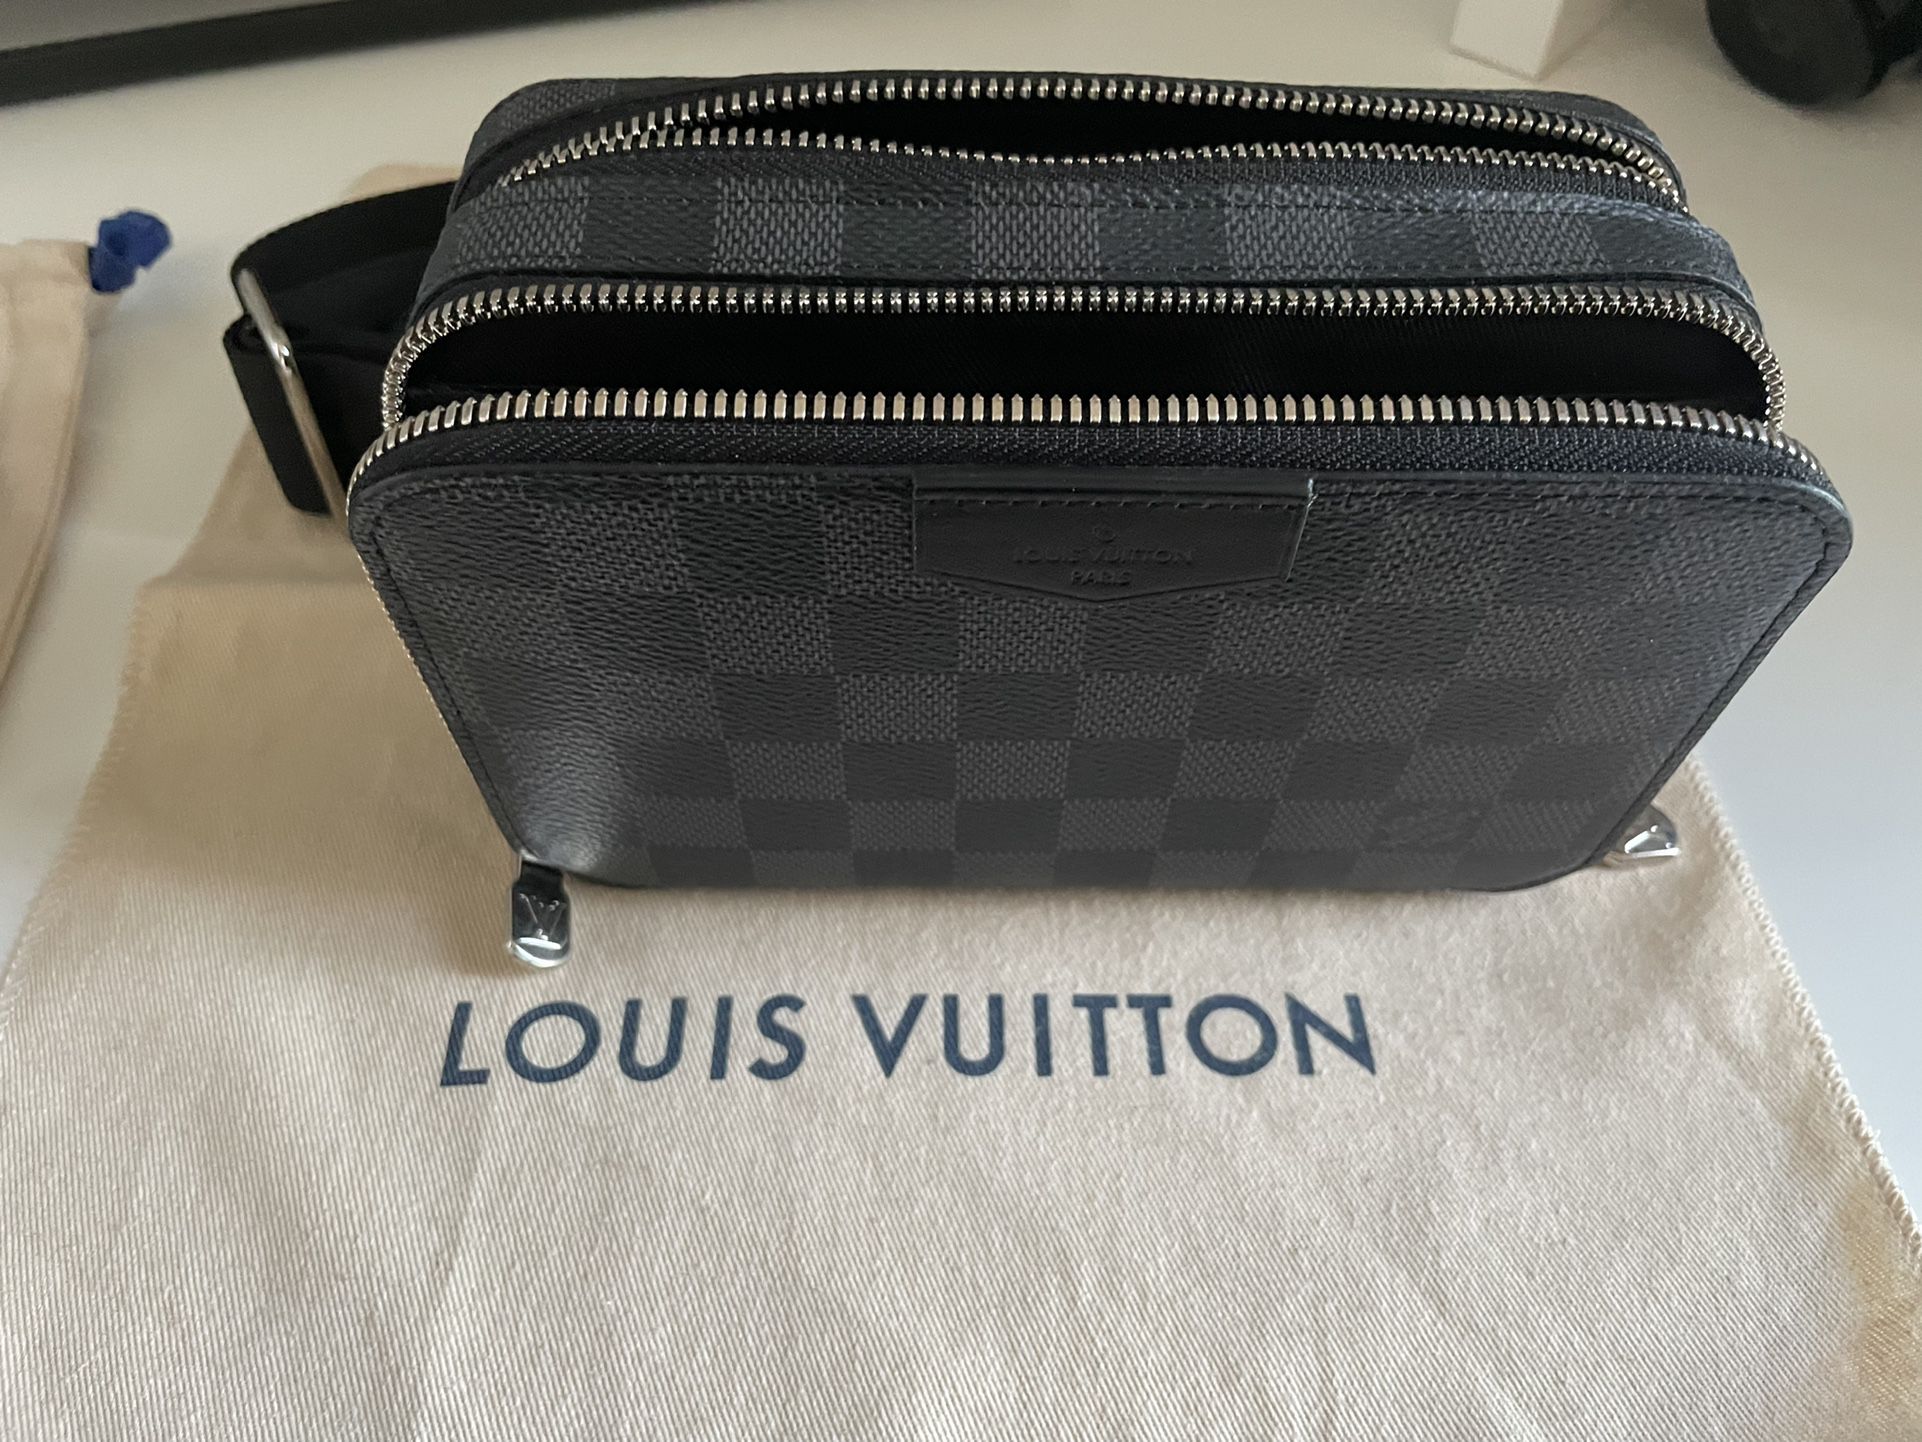 Louis Vuitton - Mens Small Bag